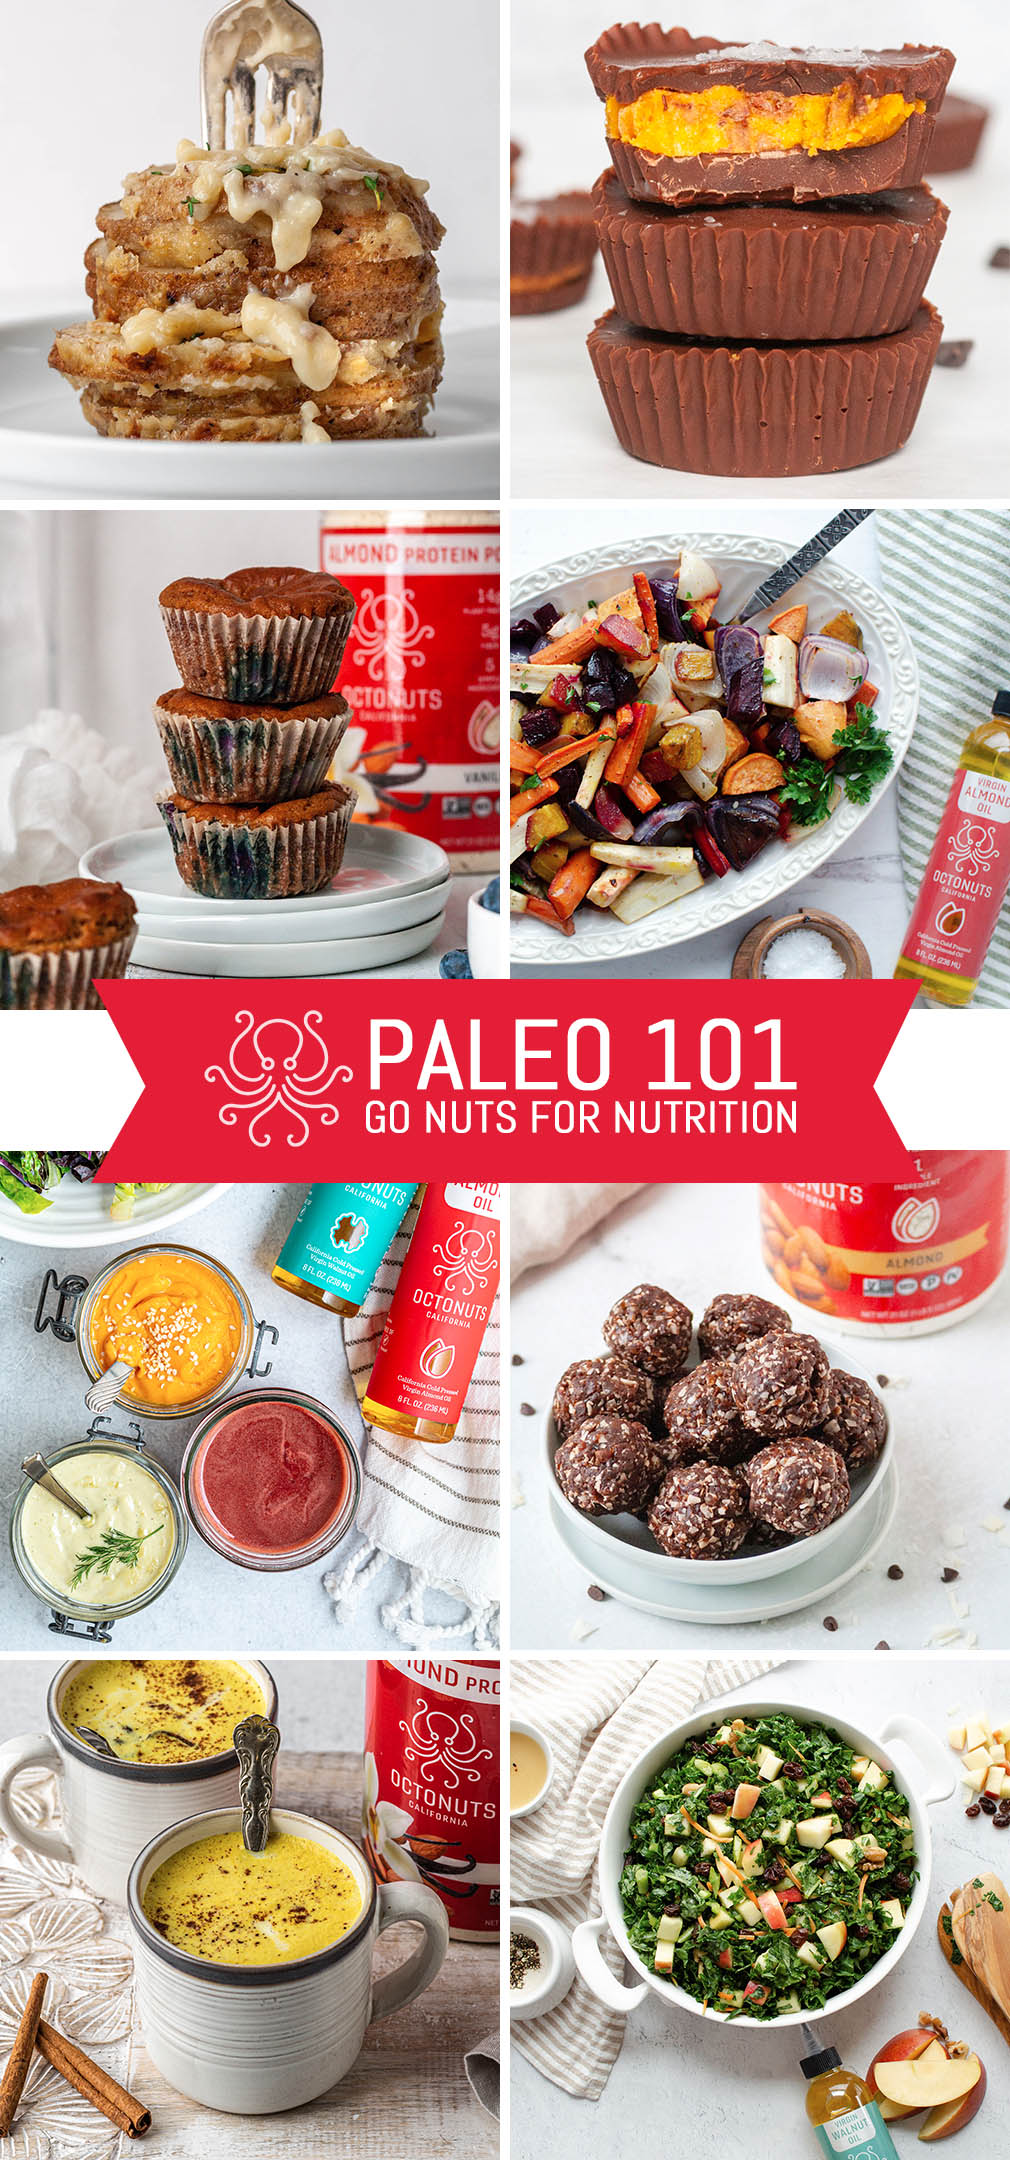 Paleo 101: Go Octonuts for Paleo Nutrition